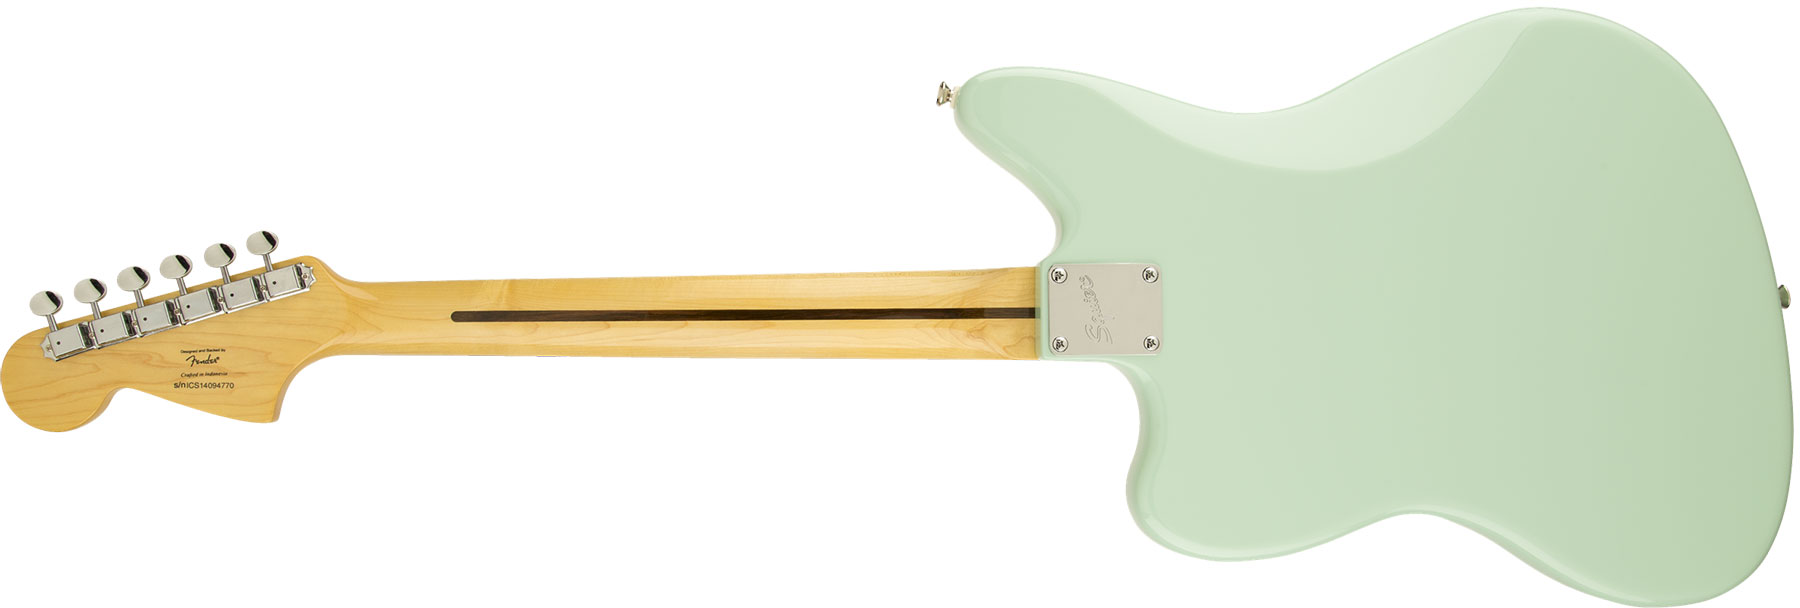 Squier Jaguar Vintage Modified Ss Lau - Surf Green - Guitarra eléctrica con forma de str. - Variation 1